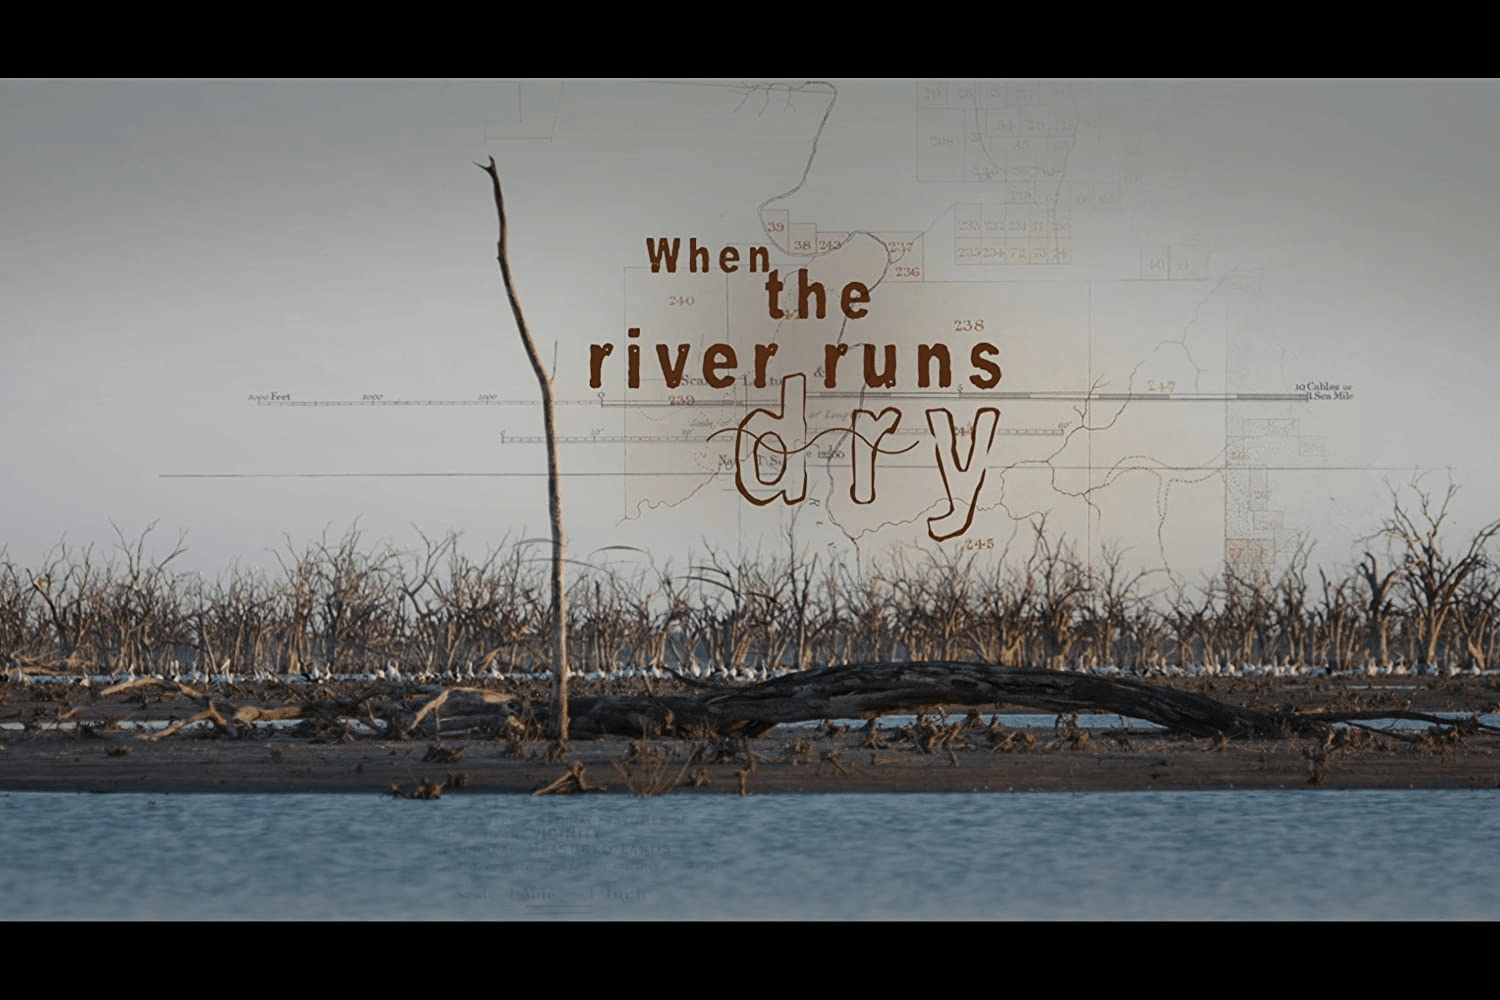 when the river runs dry